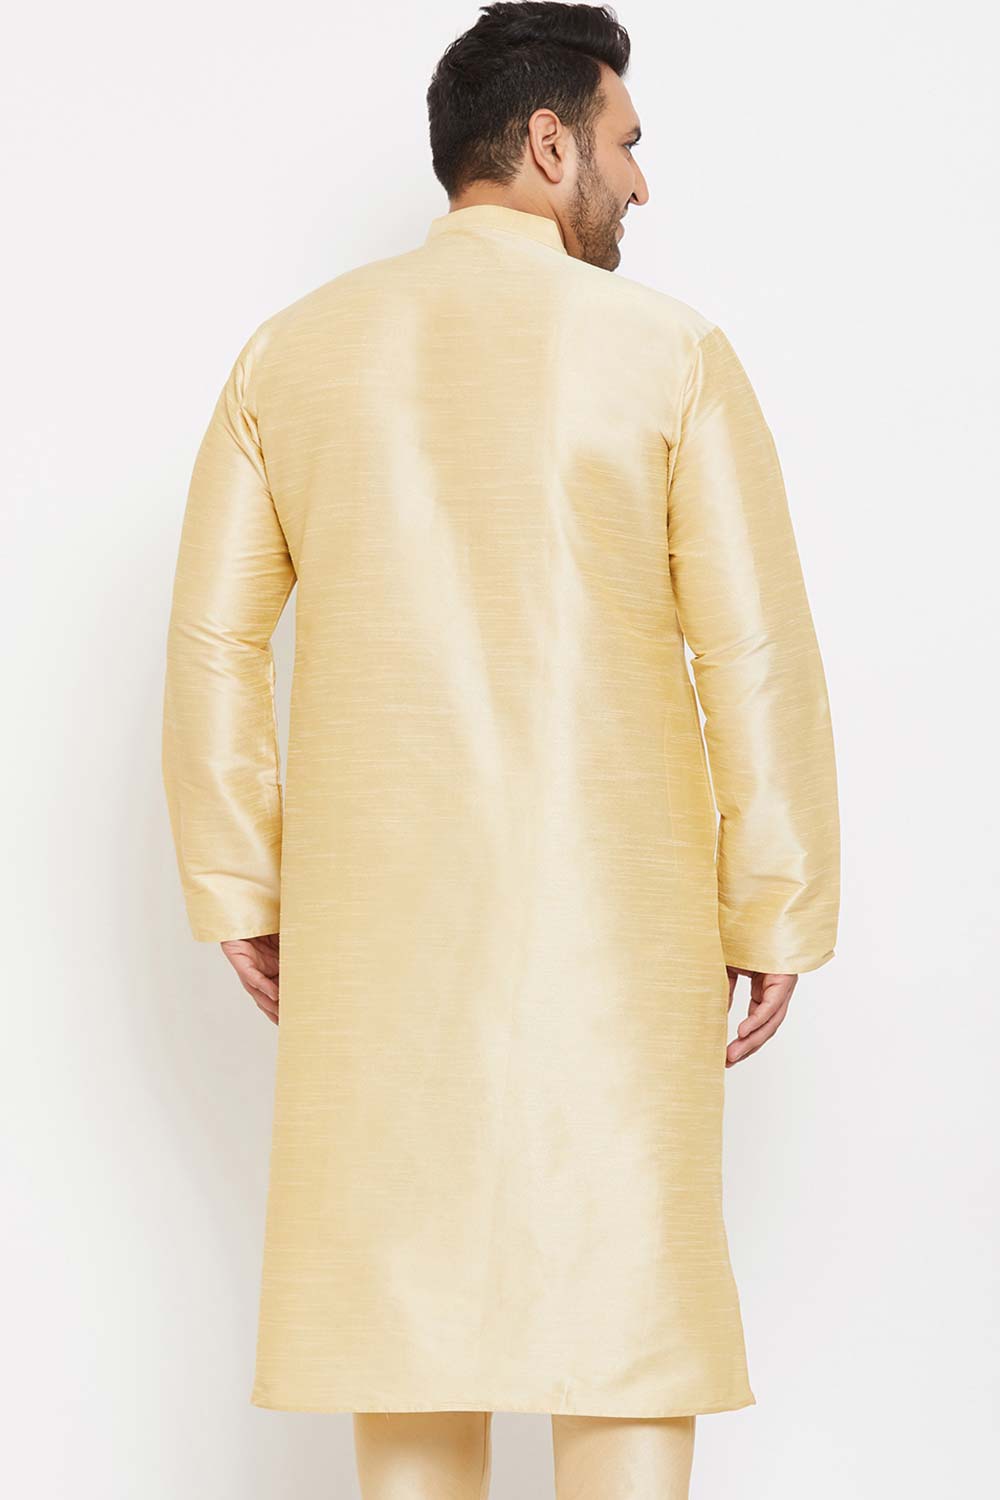 Buy Men's Silk Blend Solid Kurta in Gold - Back